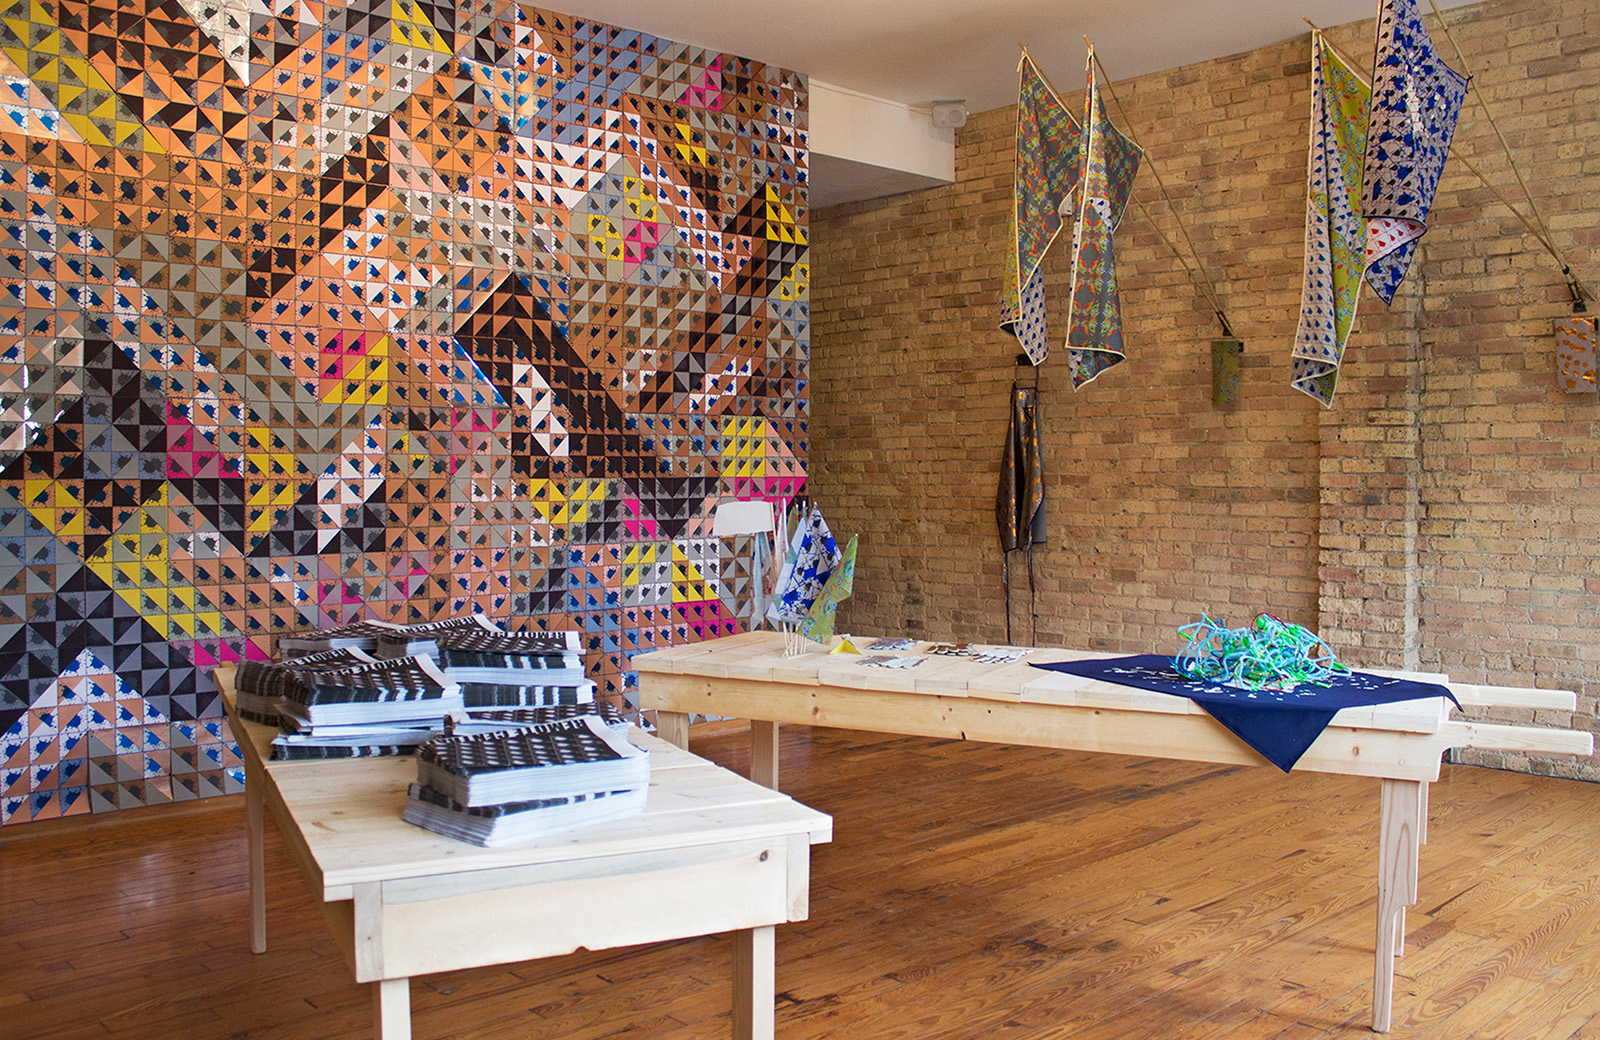  The Experimental Sound Studio, Chicago, 2014, installation view. Photo: Adam Liam Rose 